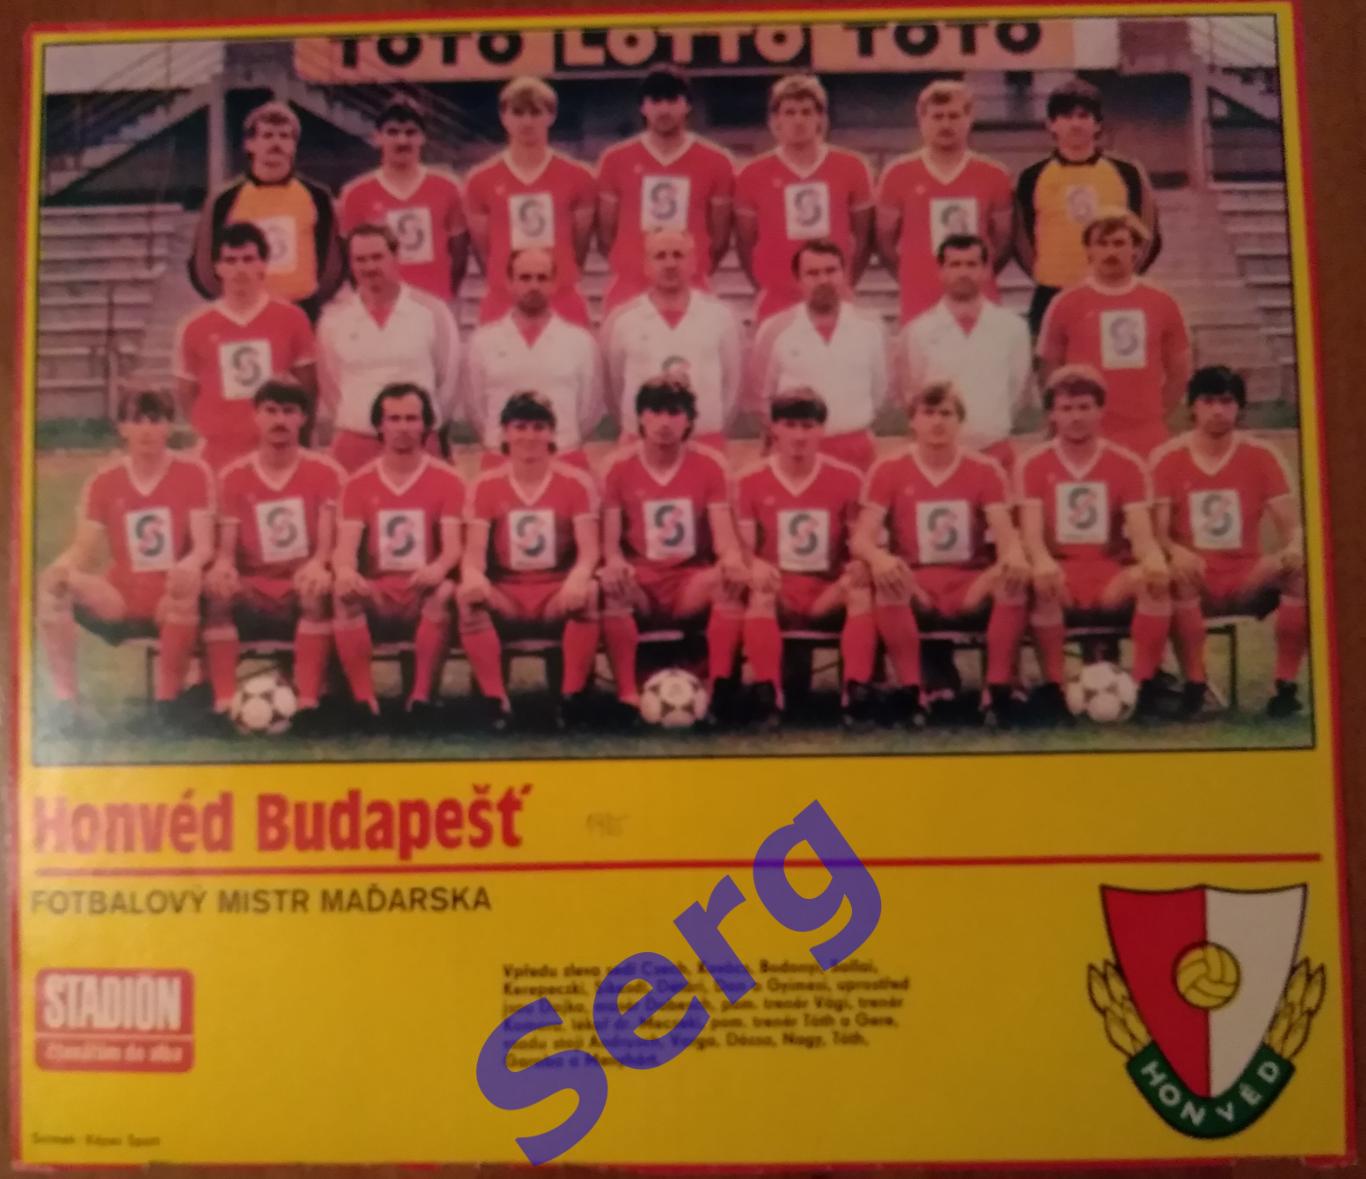 Постер Гонвед Будапешт, Венгрия из журнала Стадион/Stadion 1985 год